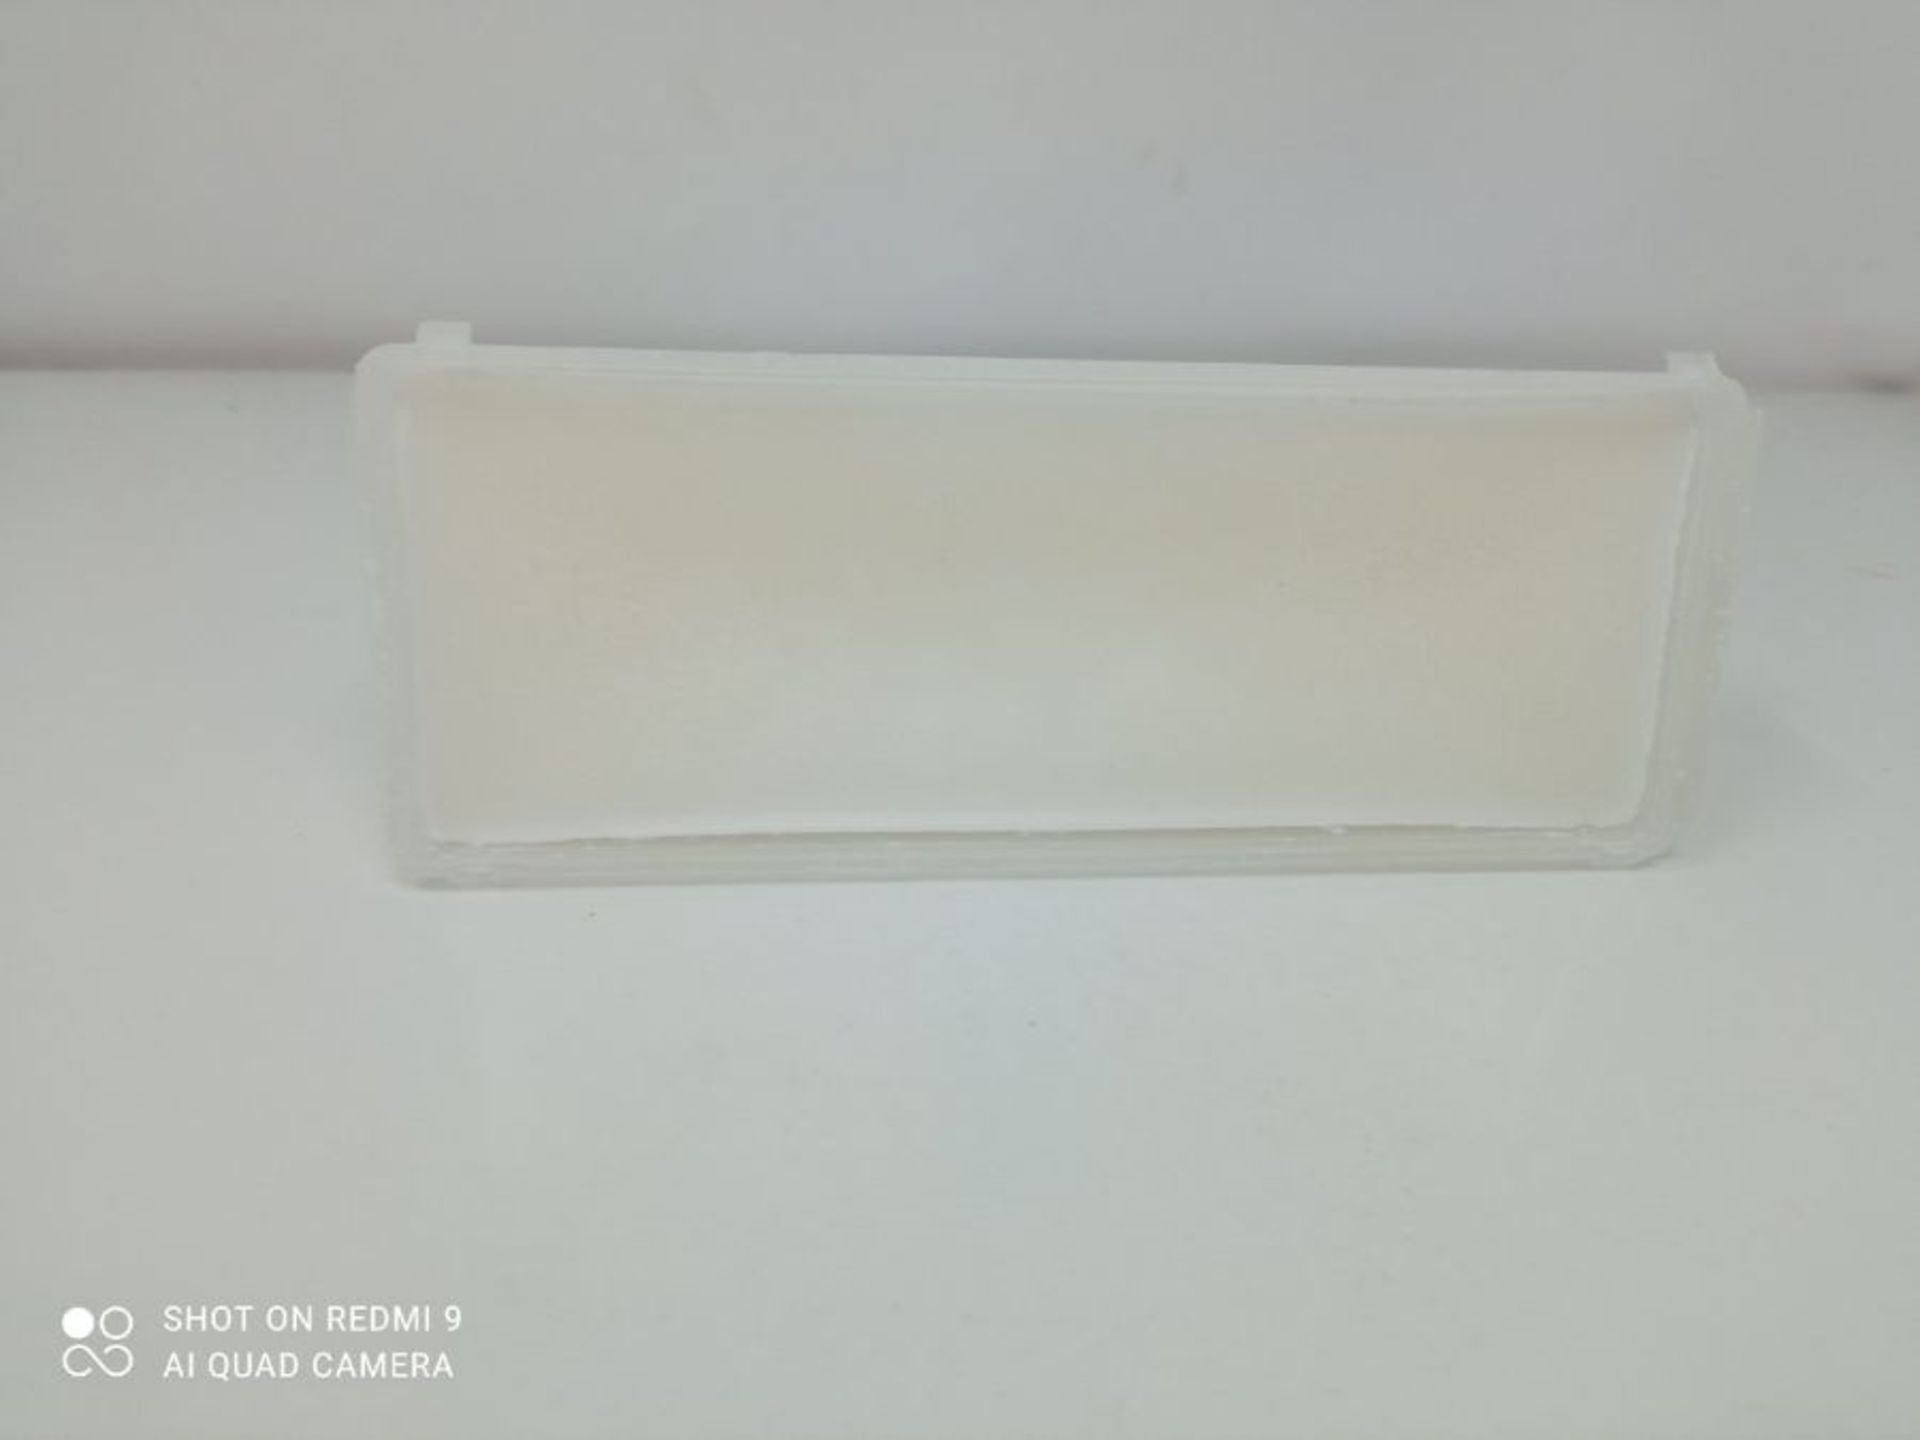 Holmenkol Natural Wax Bar 150g - Neutral 1 - Image 3 of 3